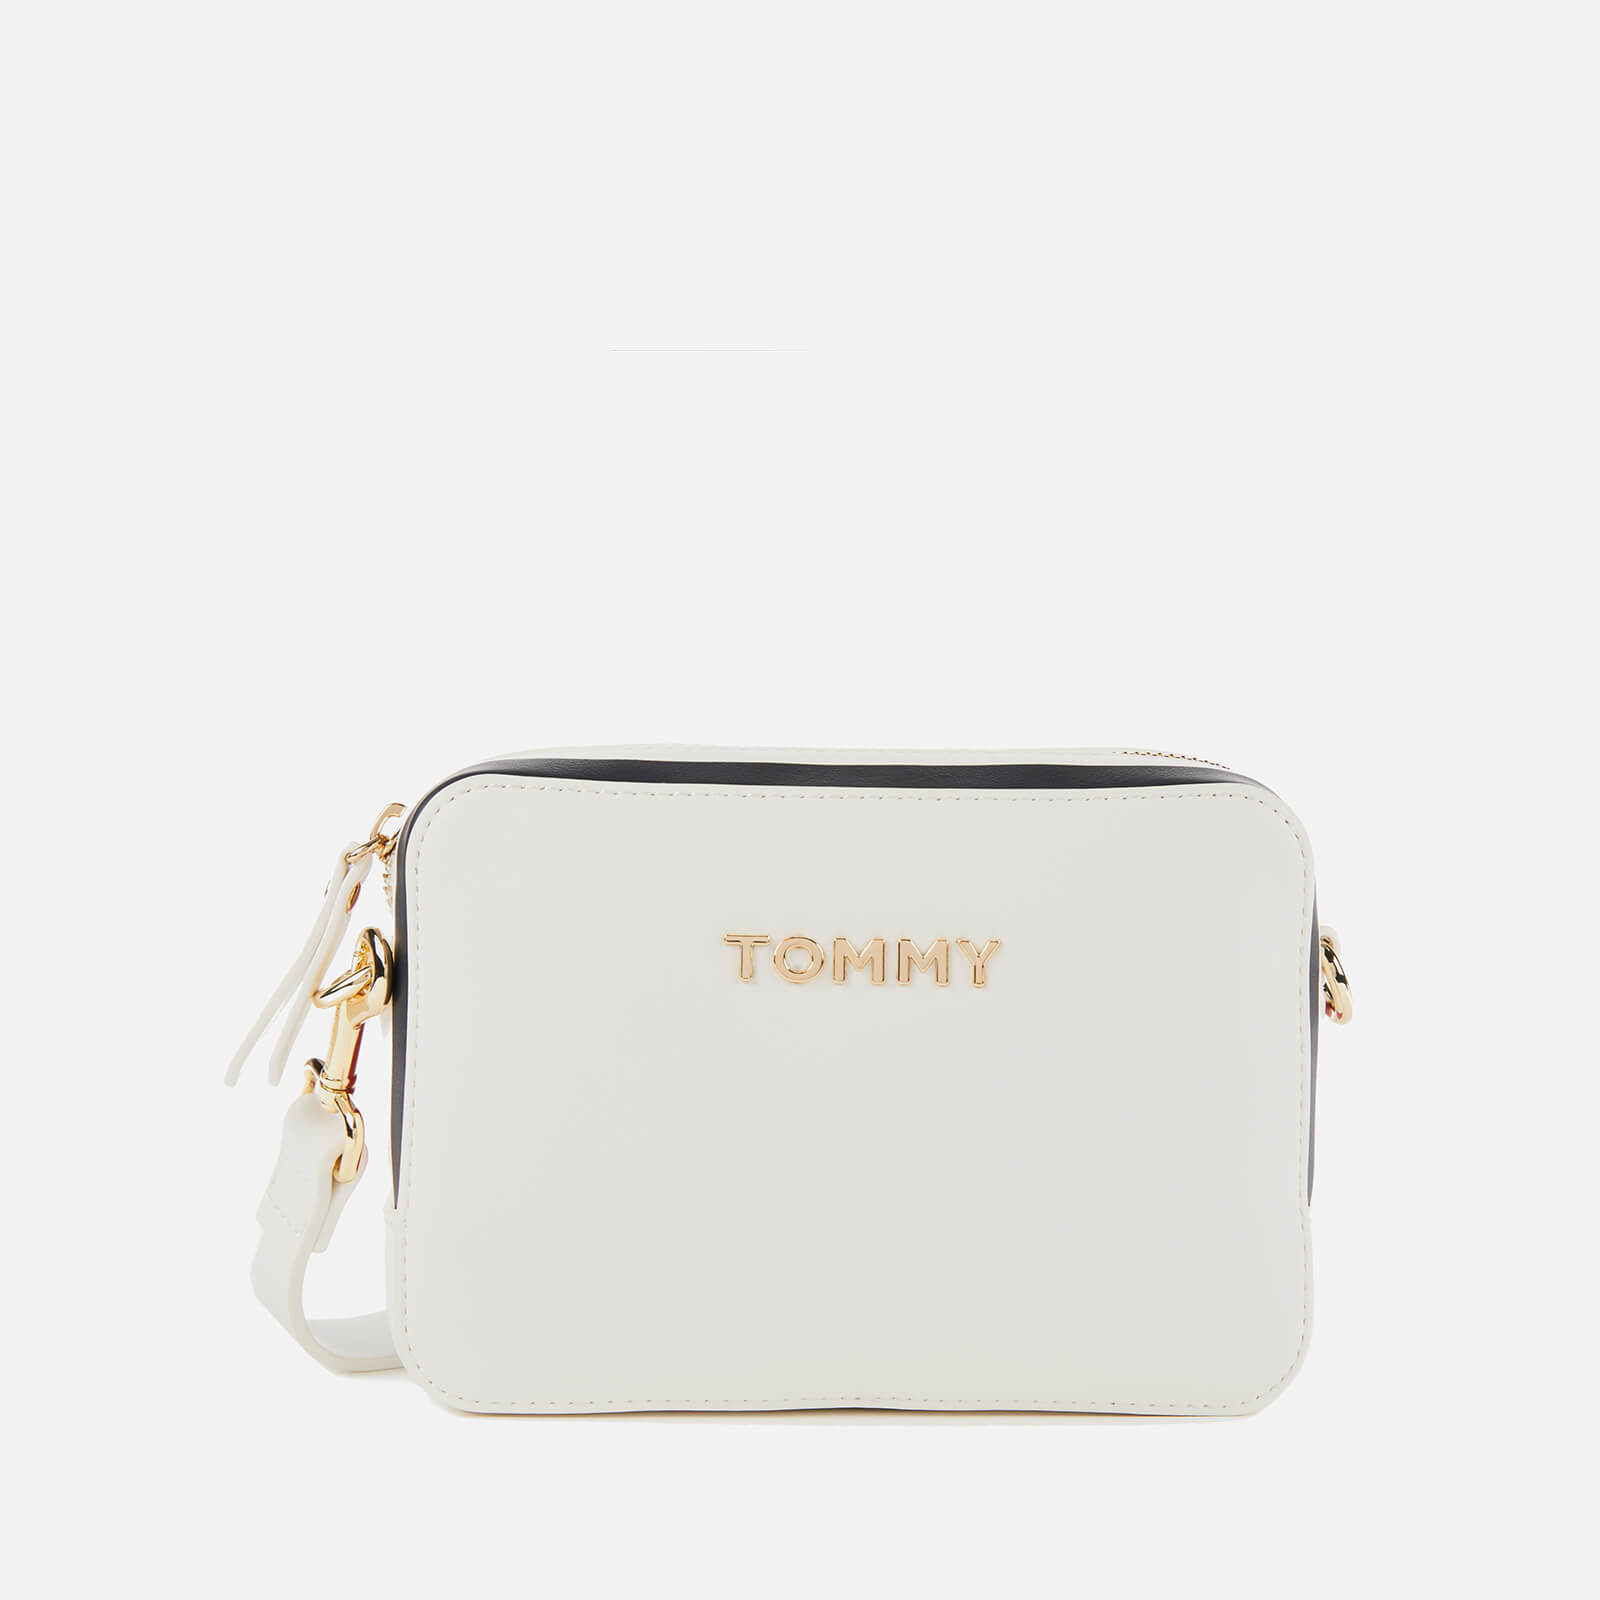 tommy hilfiger white purse